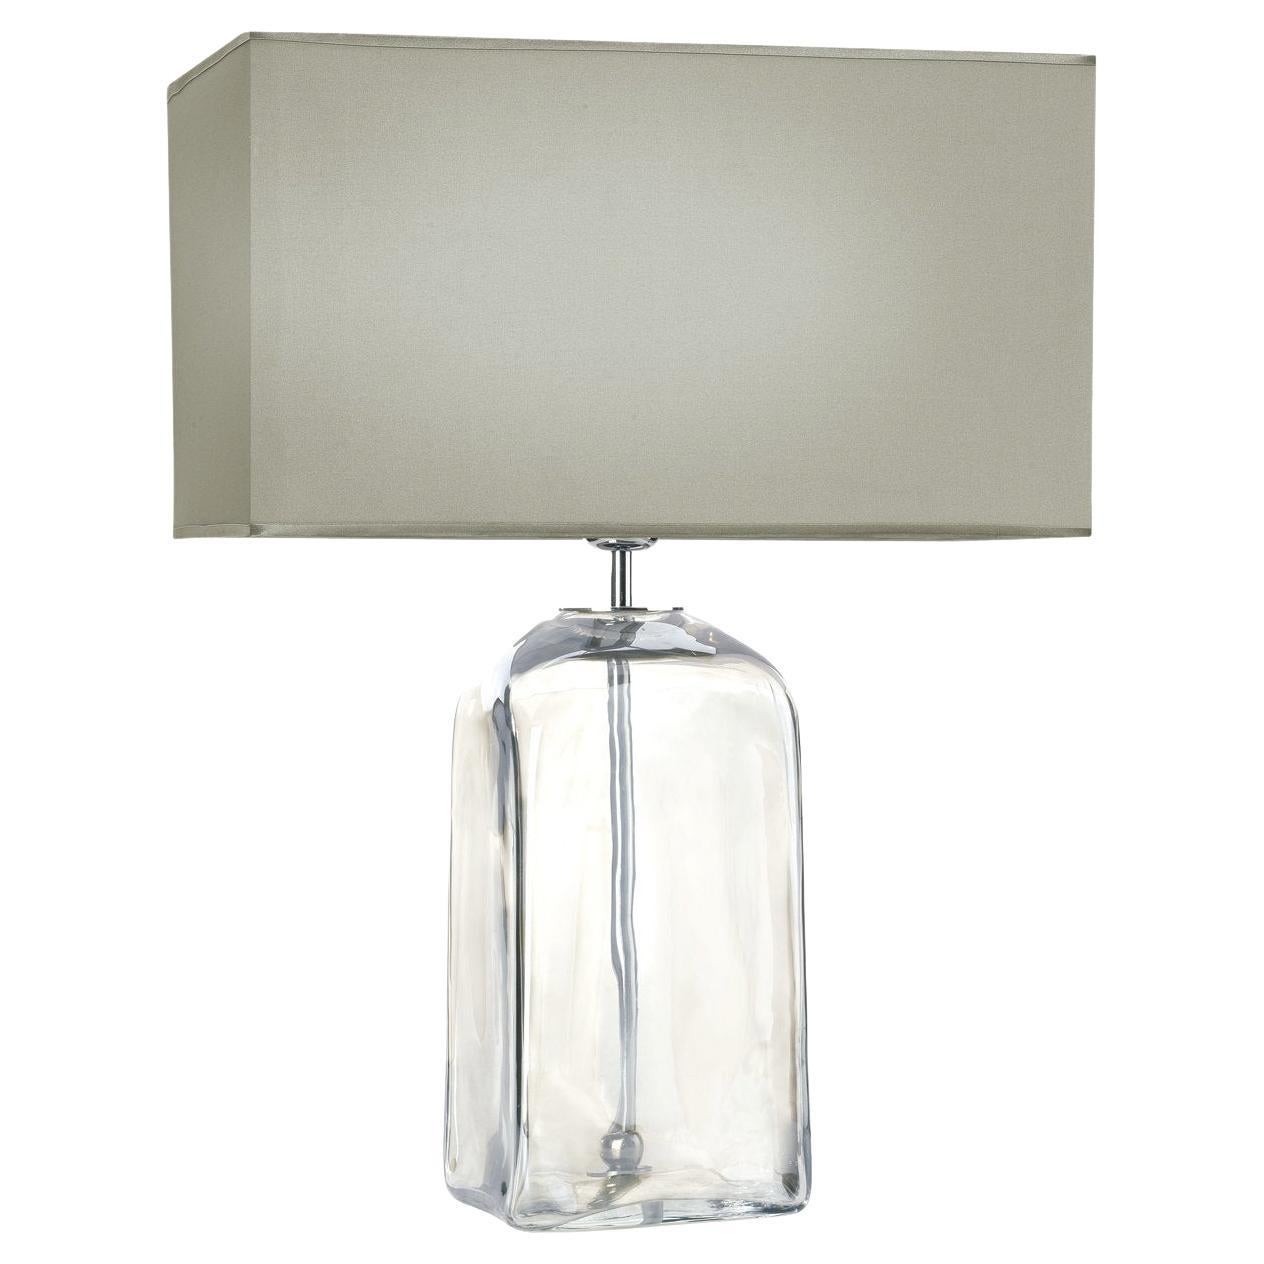 Carmel Desk Lamp